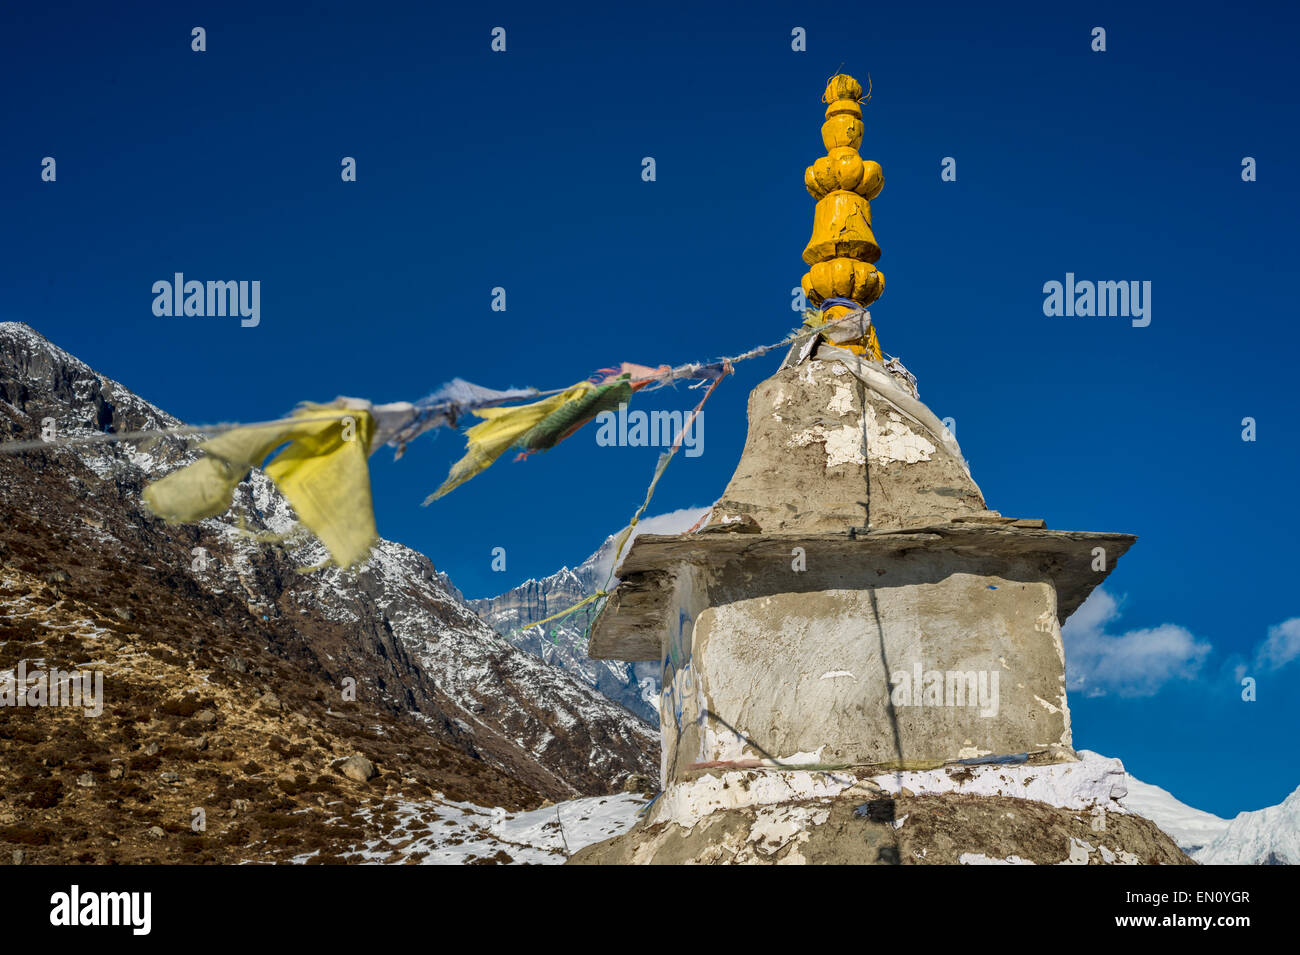 Stupa in the himalayas region Stock Photo